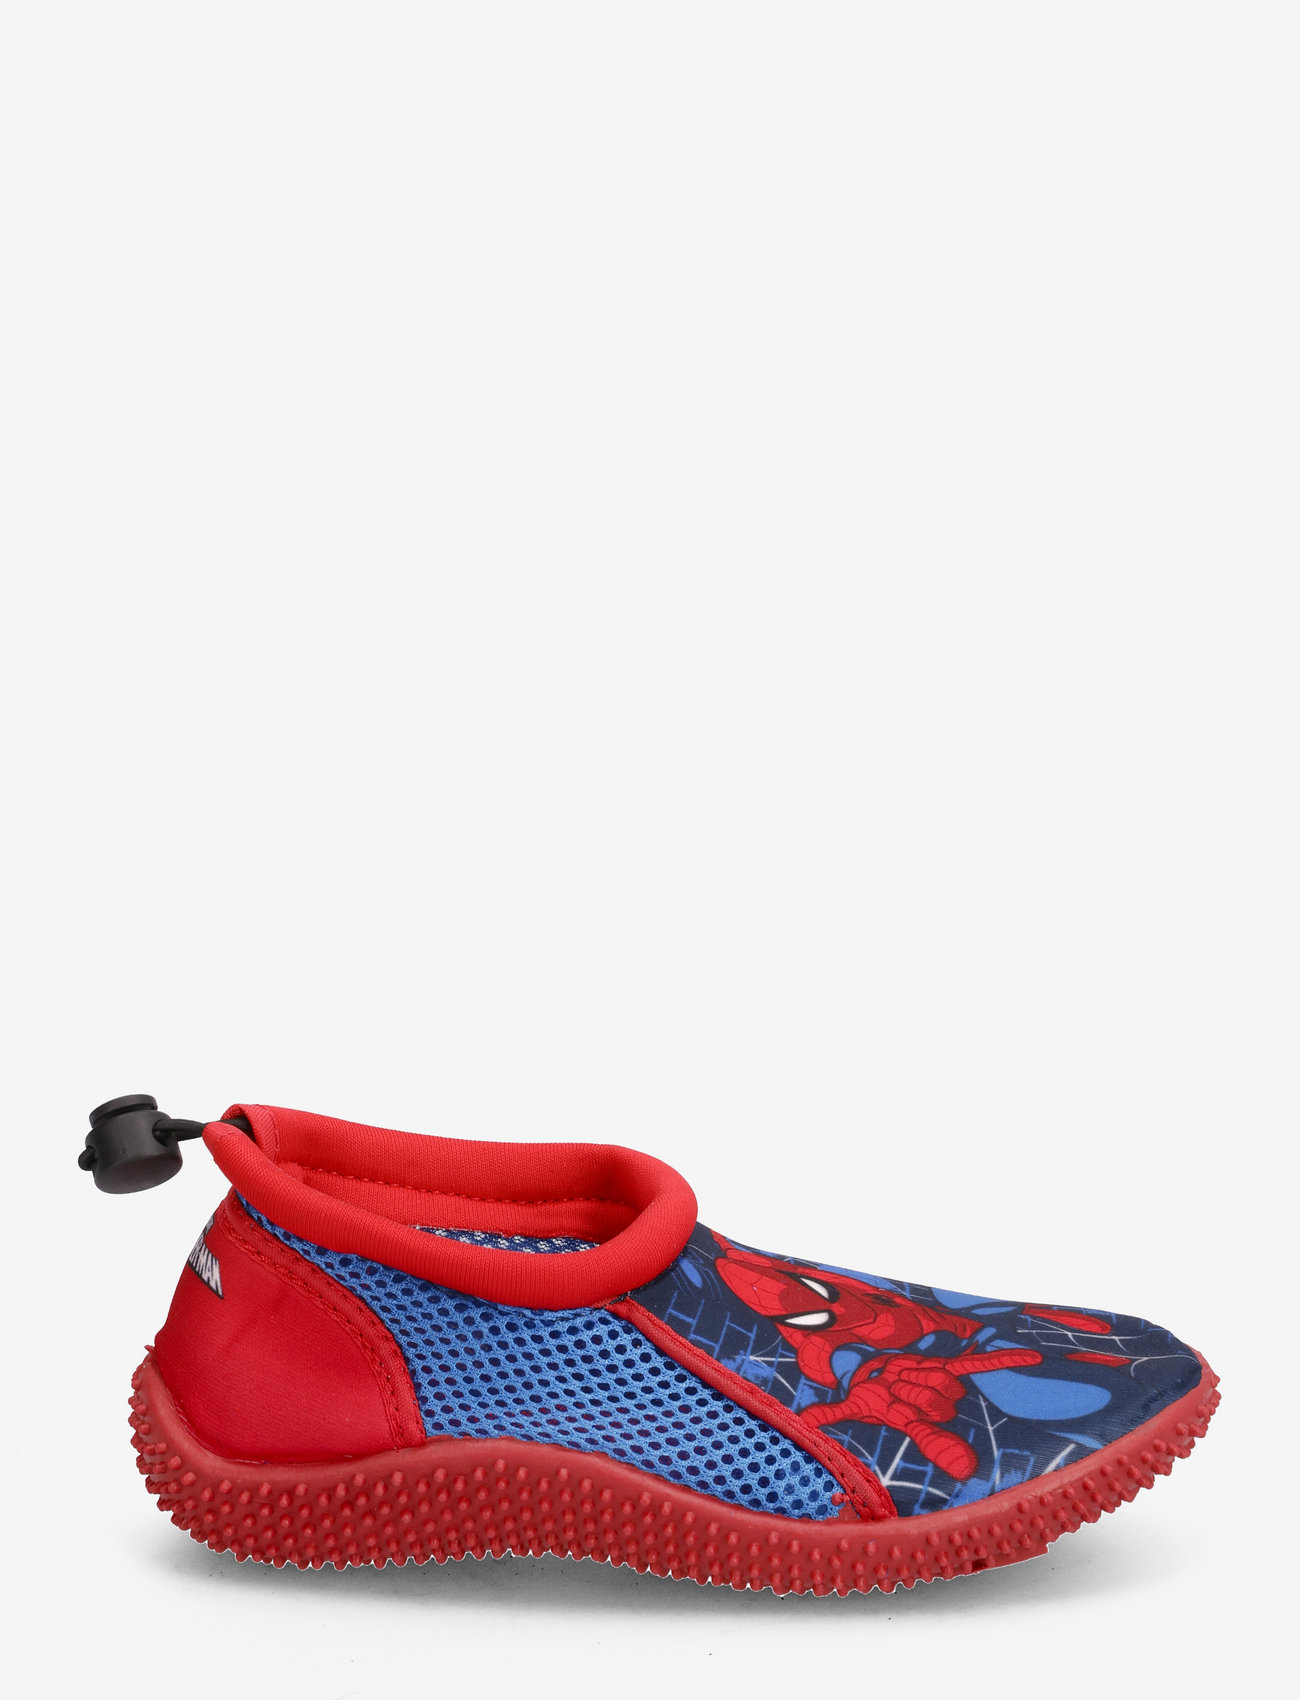 Leomil - SPIDERMAN Aqua shoes - sommerkupp - cobalt blue/red - 1